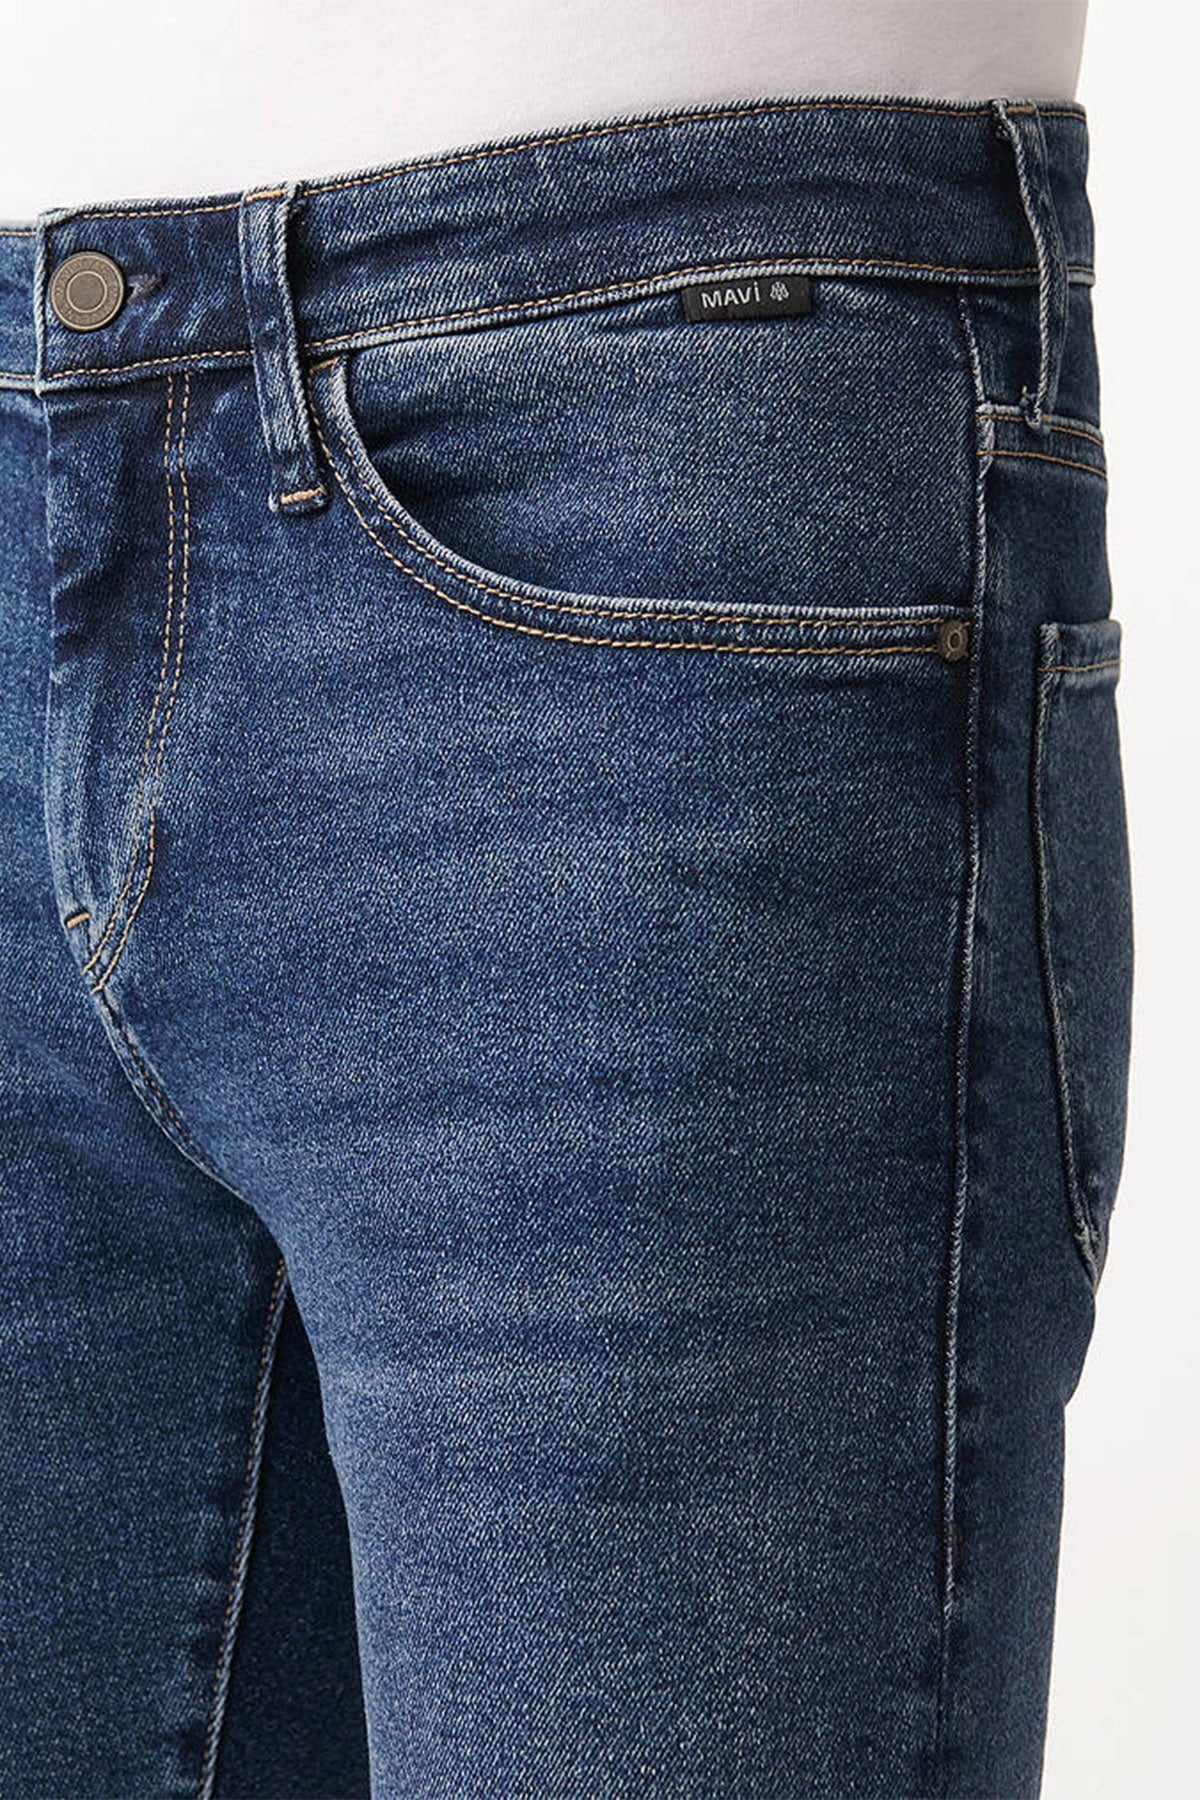 Mavi James Pamuklu Normal Bel Skinny Dar Paça Jeans Erkek Kot Pantolon 0042433452 MAVİ